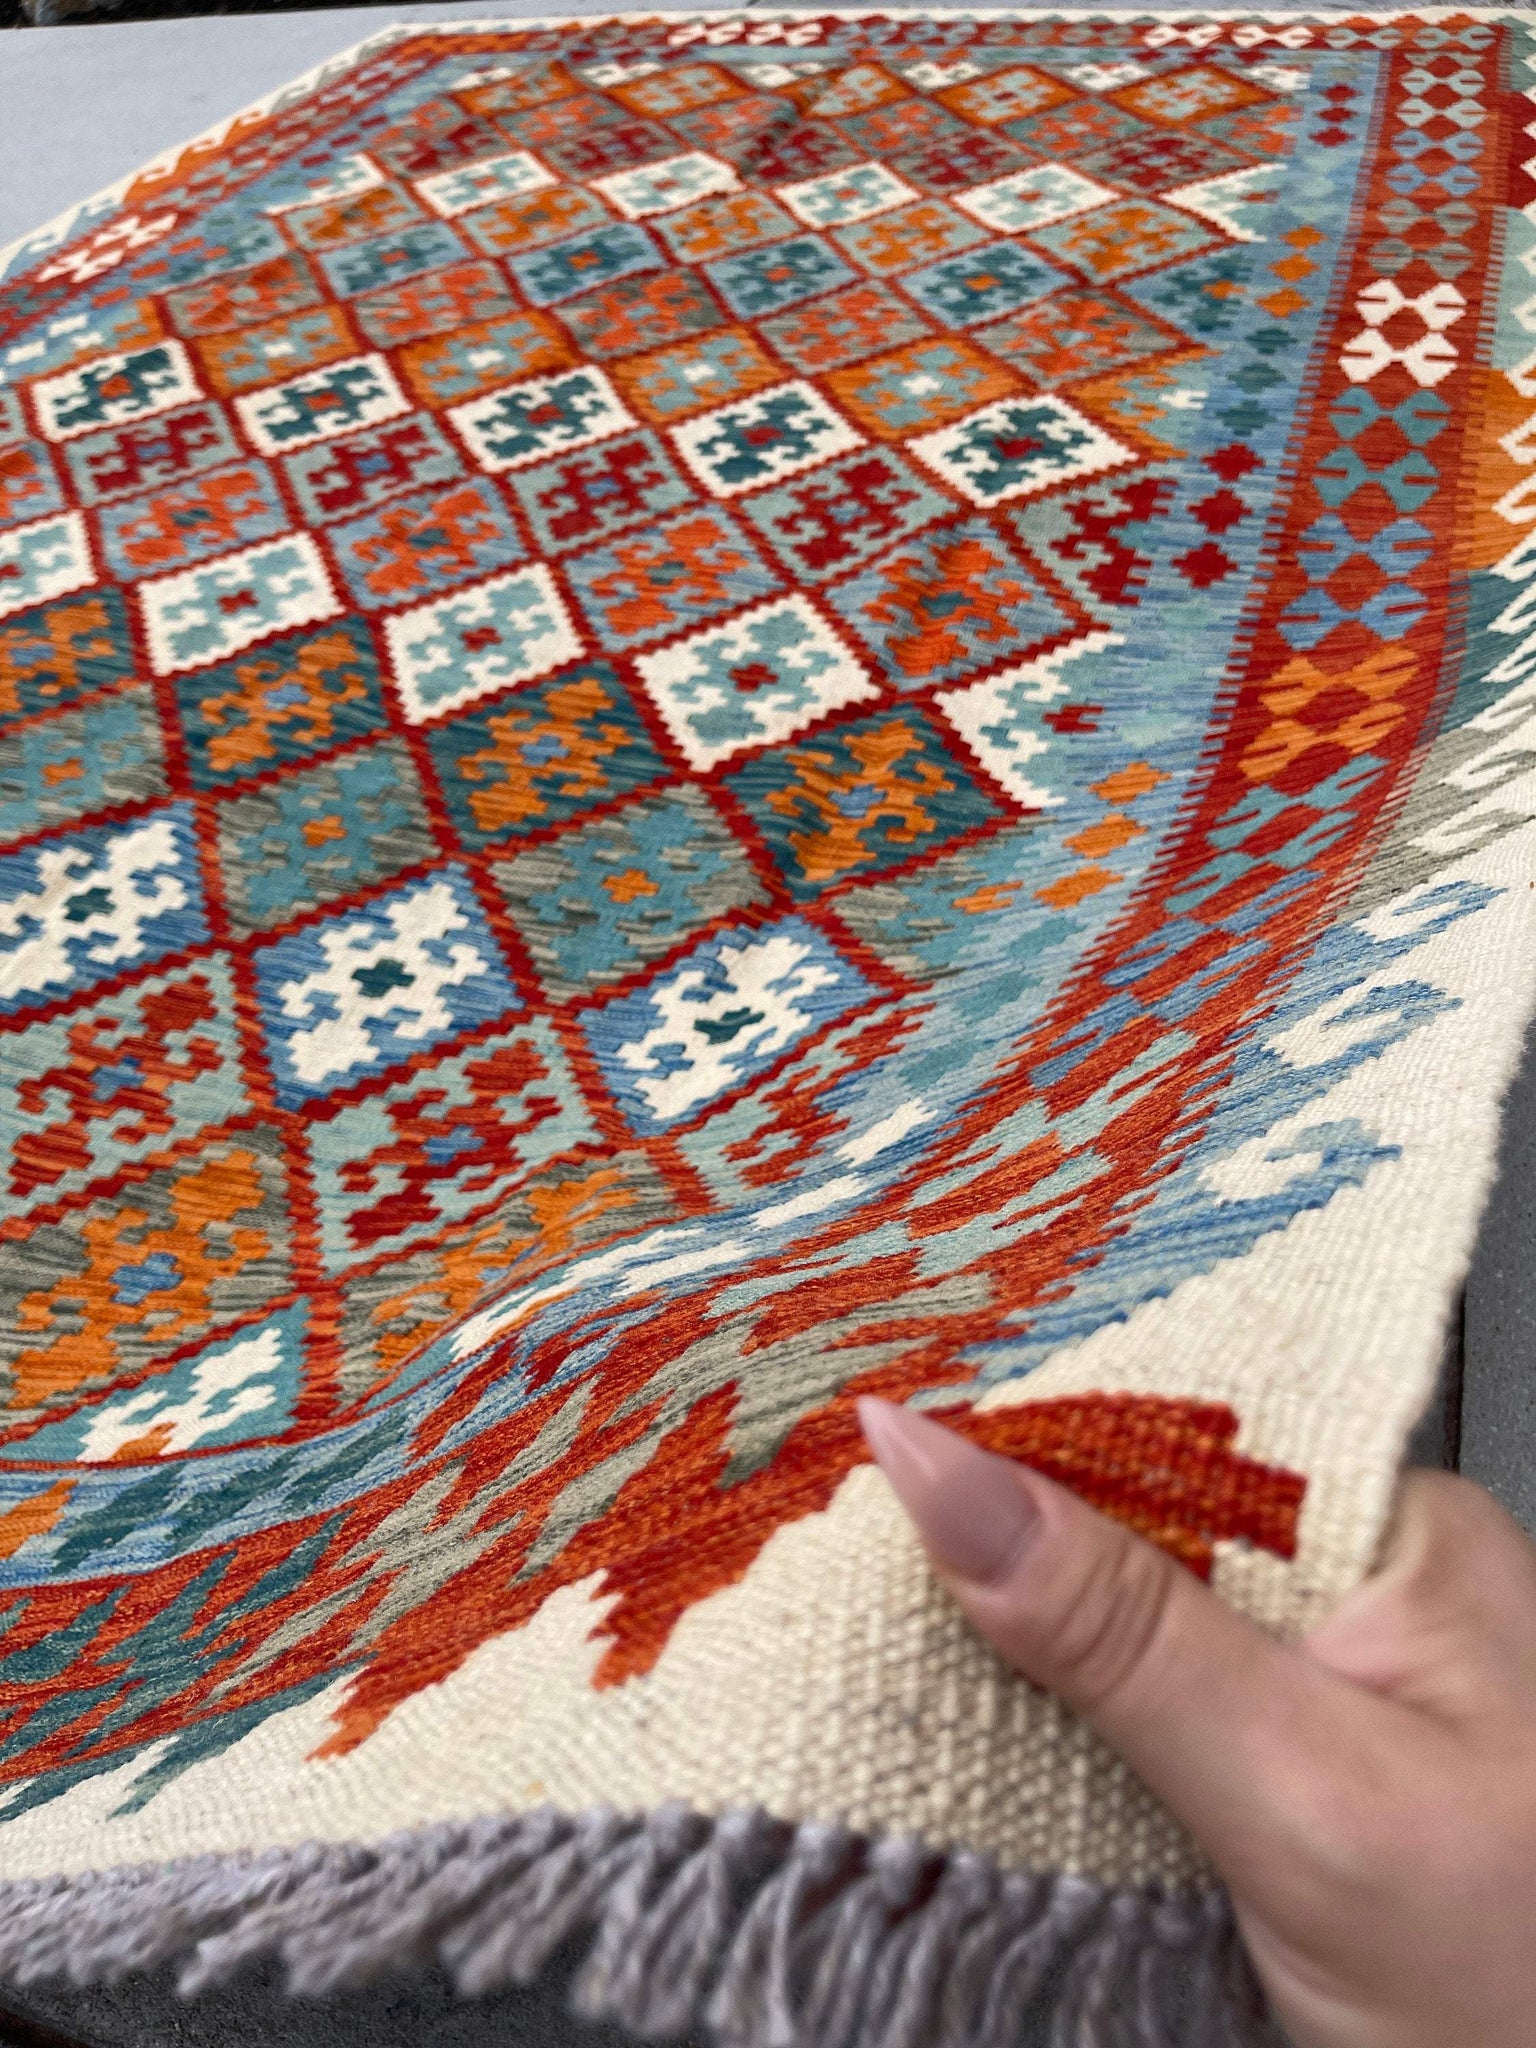 7x10 (215x305) Handmade Afghan Kilim Flatweave Rug | Ivory Orange Blue Sage | Boho Tribal Moroccan Outdoor Wool Knotted Woven